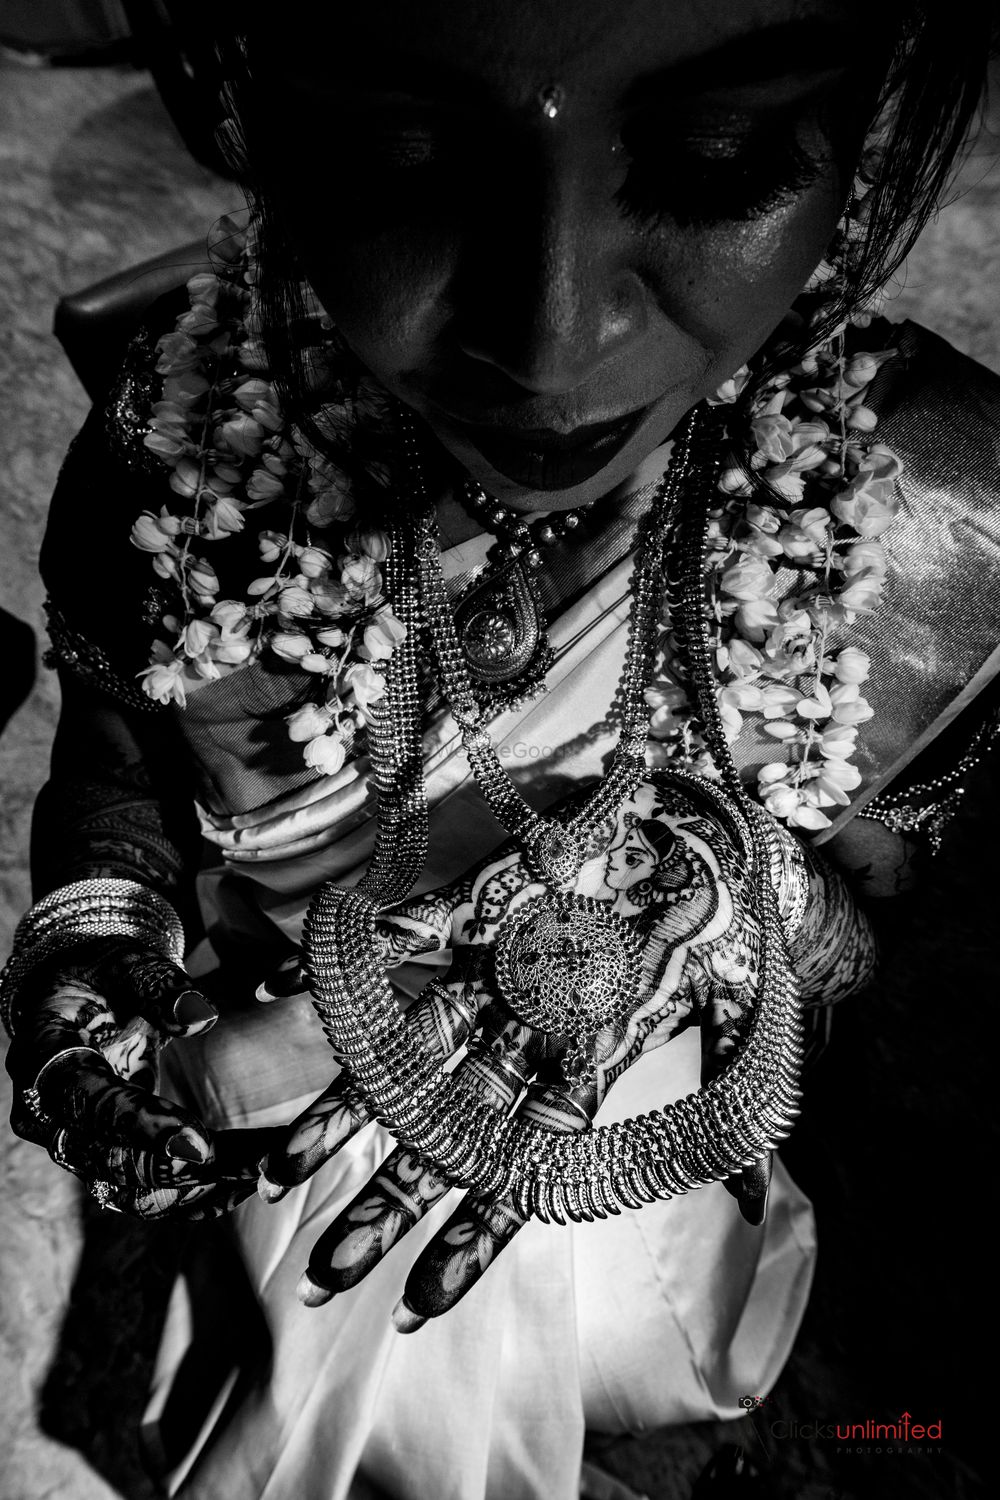 Photo From Rajesh + Binisha (Mallu Wedding) - By Clicksunlimited Photography